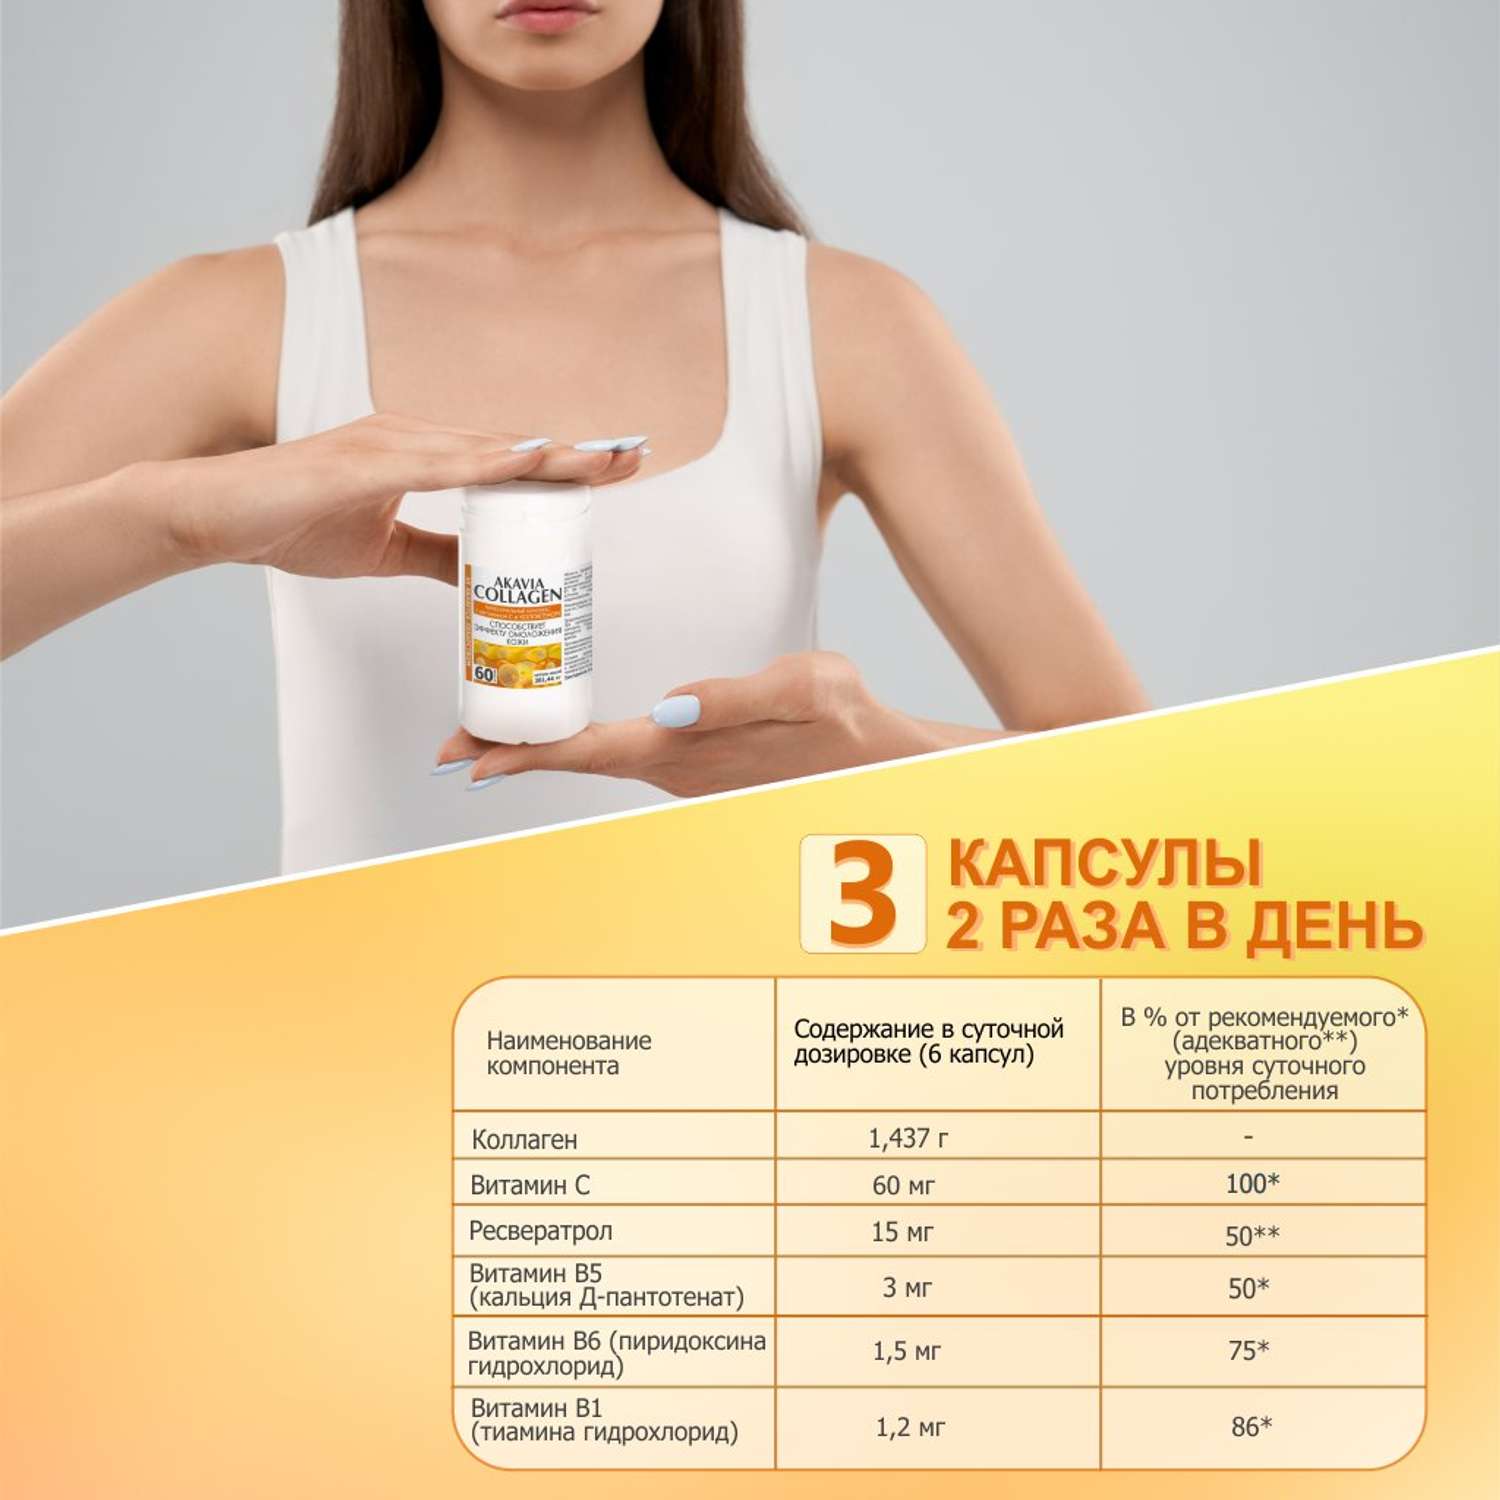 БАД АКАВИЯ Коллаген для упругости кожи коллаген с витамином С в капсулах 381 мг №60 кап. - фото 5